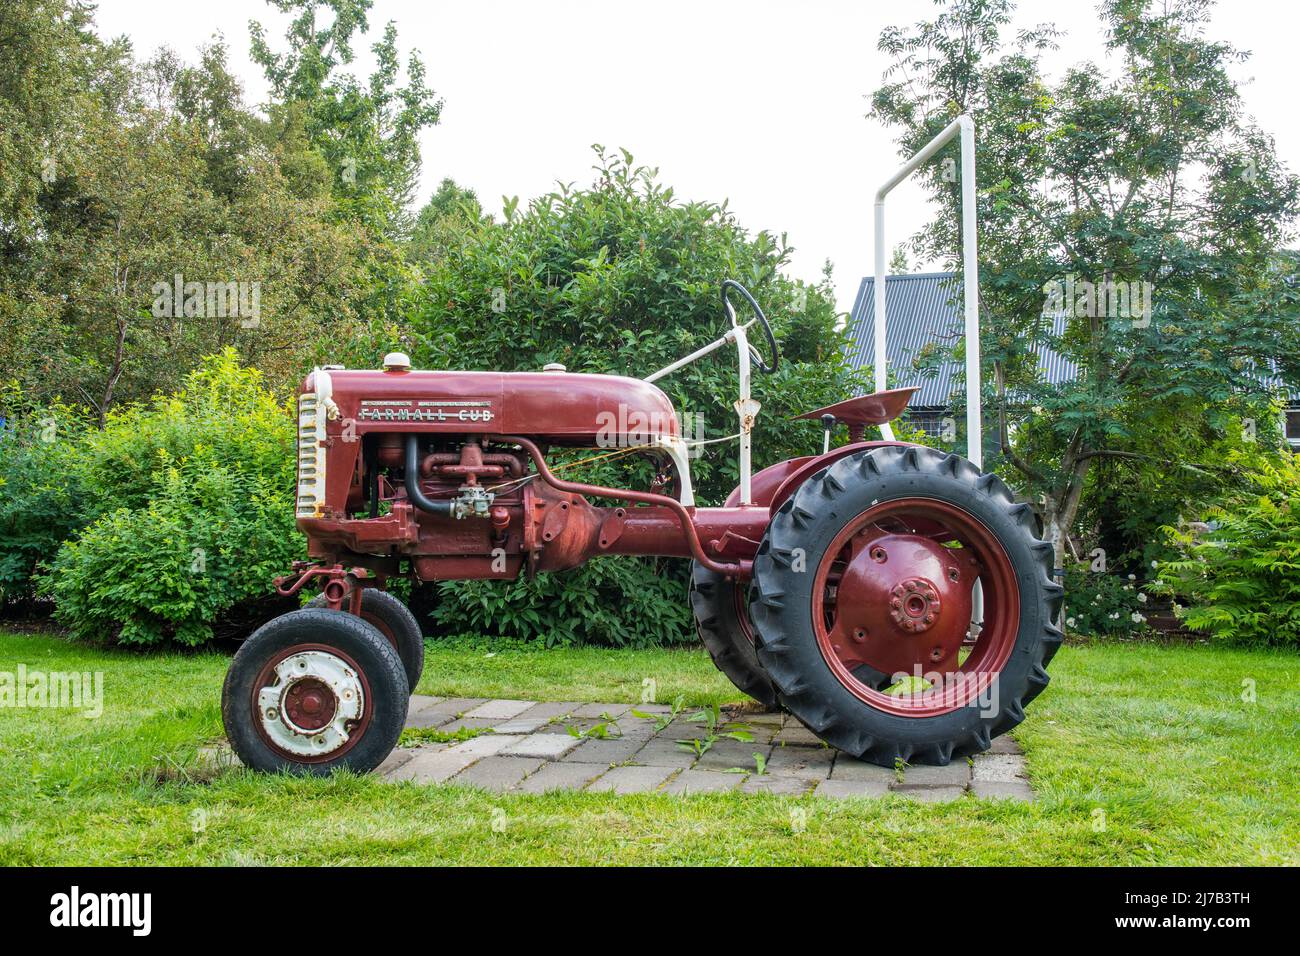 Akureyri, Iceland - August 4. 2021: Old Farmall Cup tractor in the botanical garden of Akureyri Stock Photo